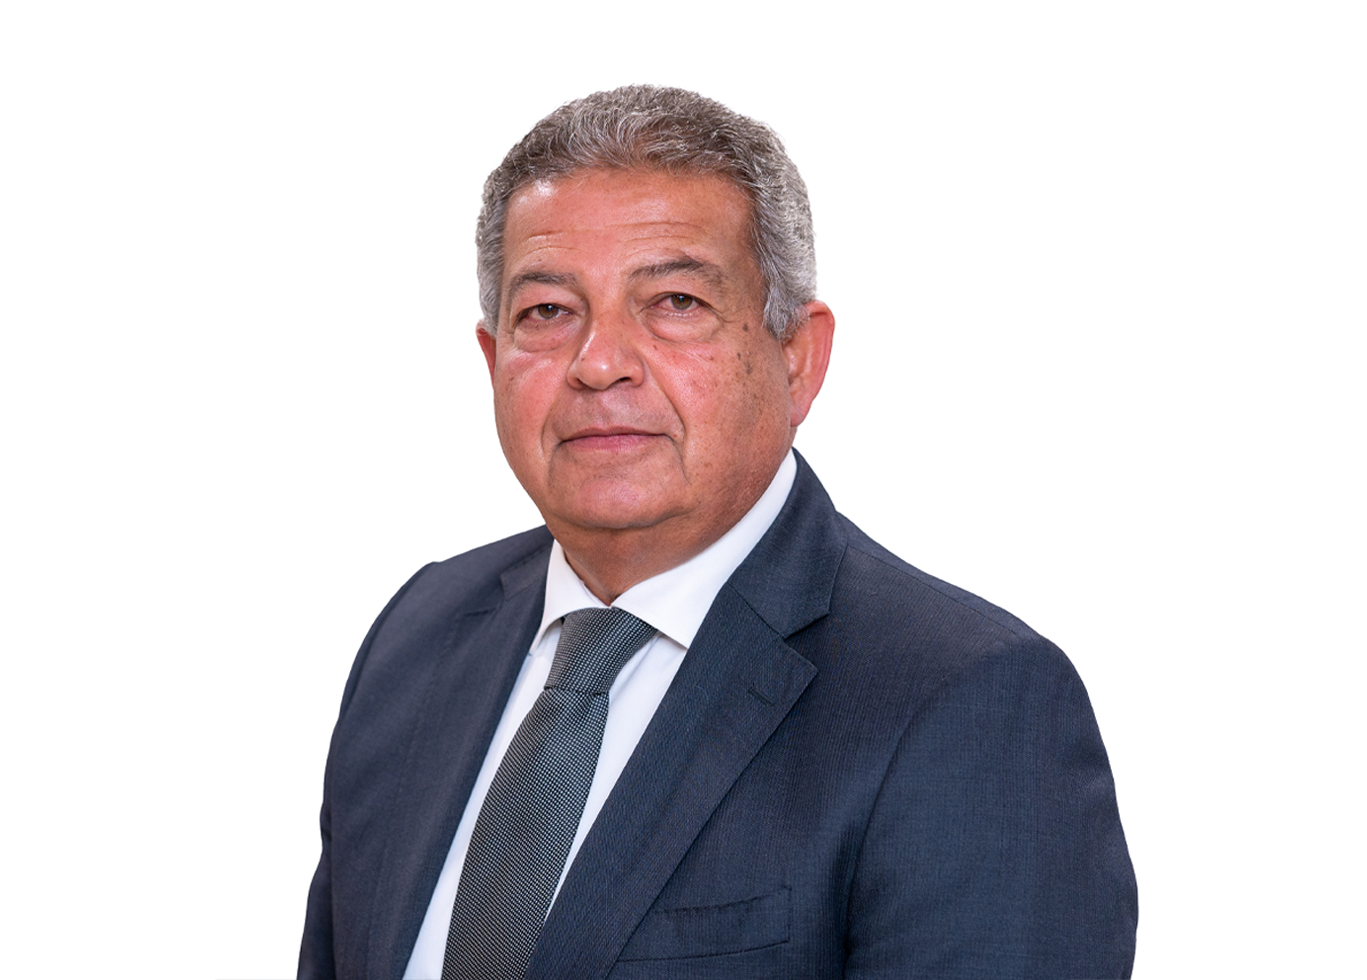 Khaled Mahmoud Abdel Aziz Mahmoud